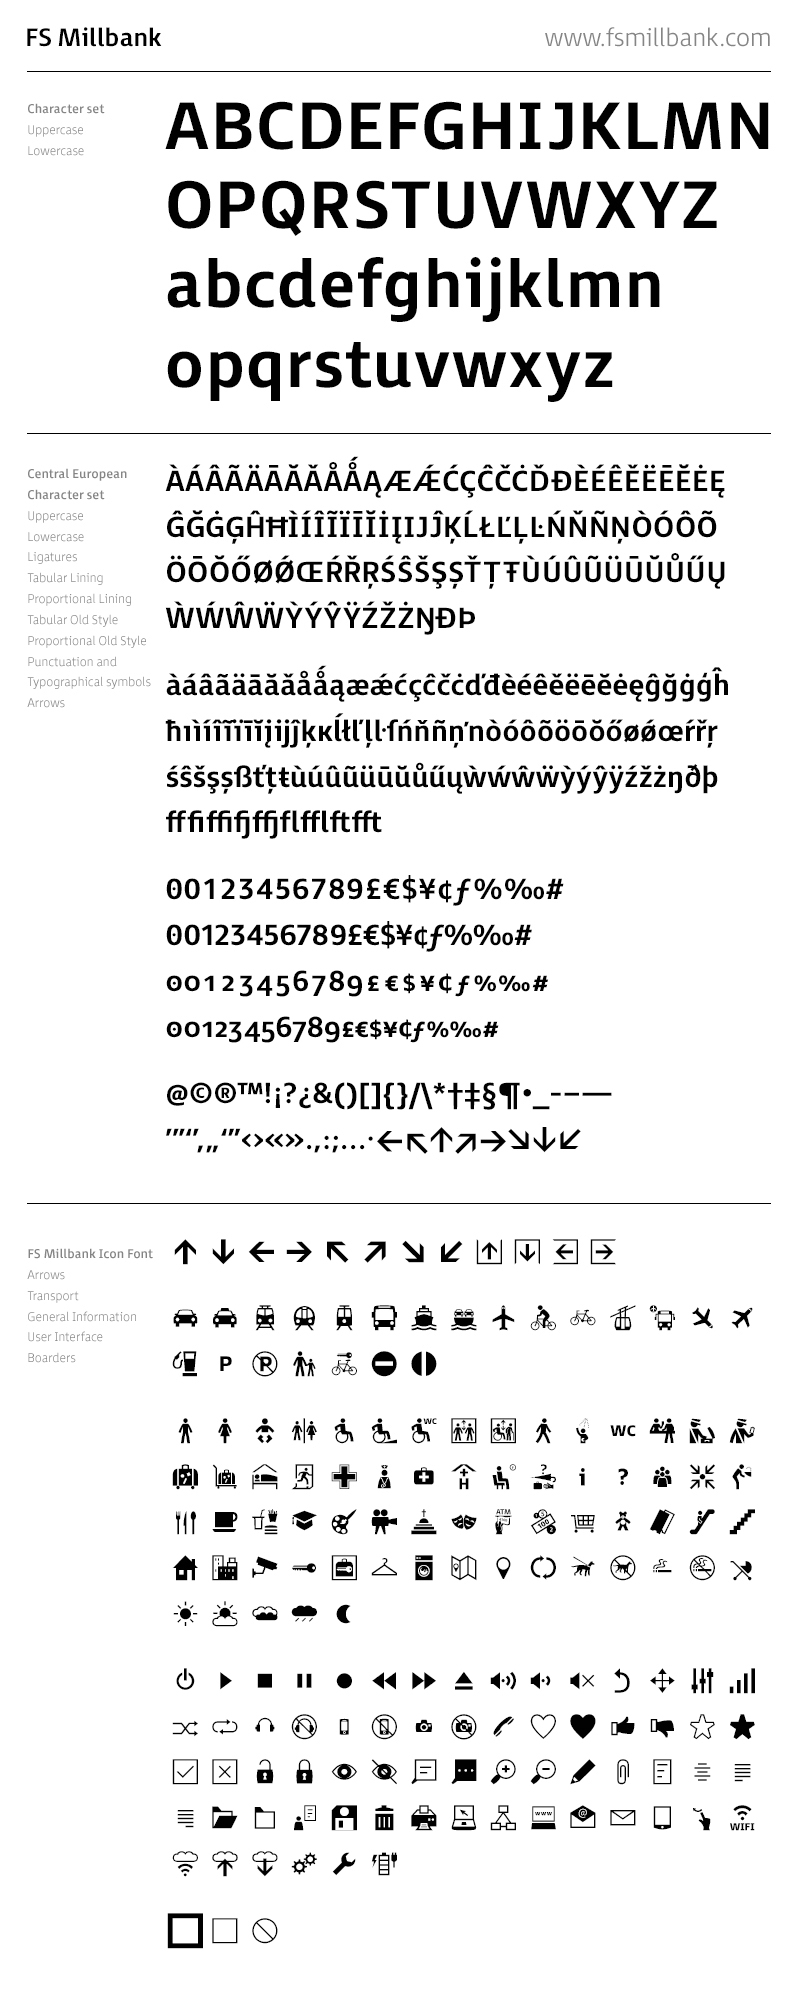 font new font new typeface font design type design wayfinding